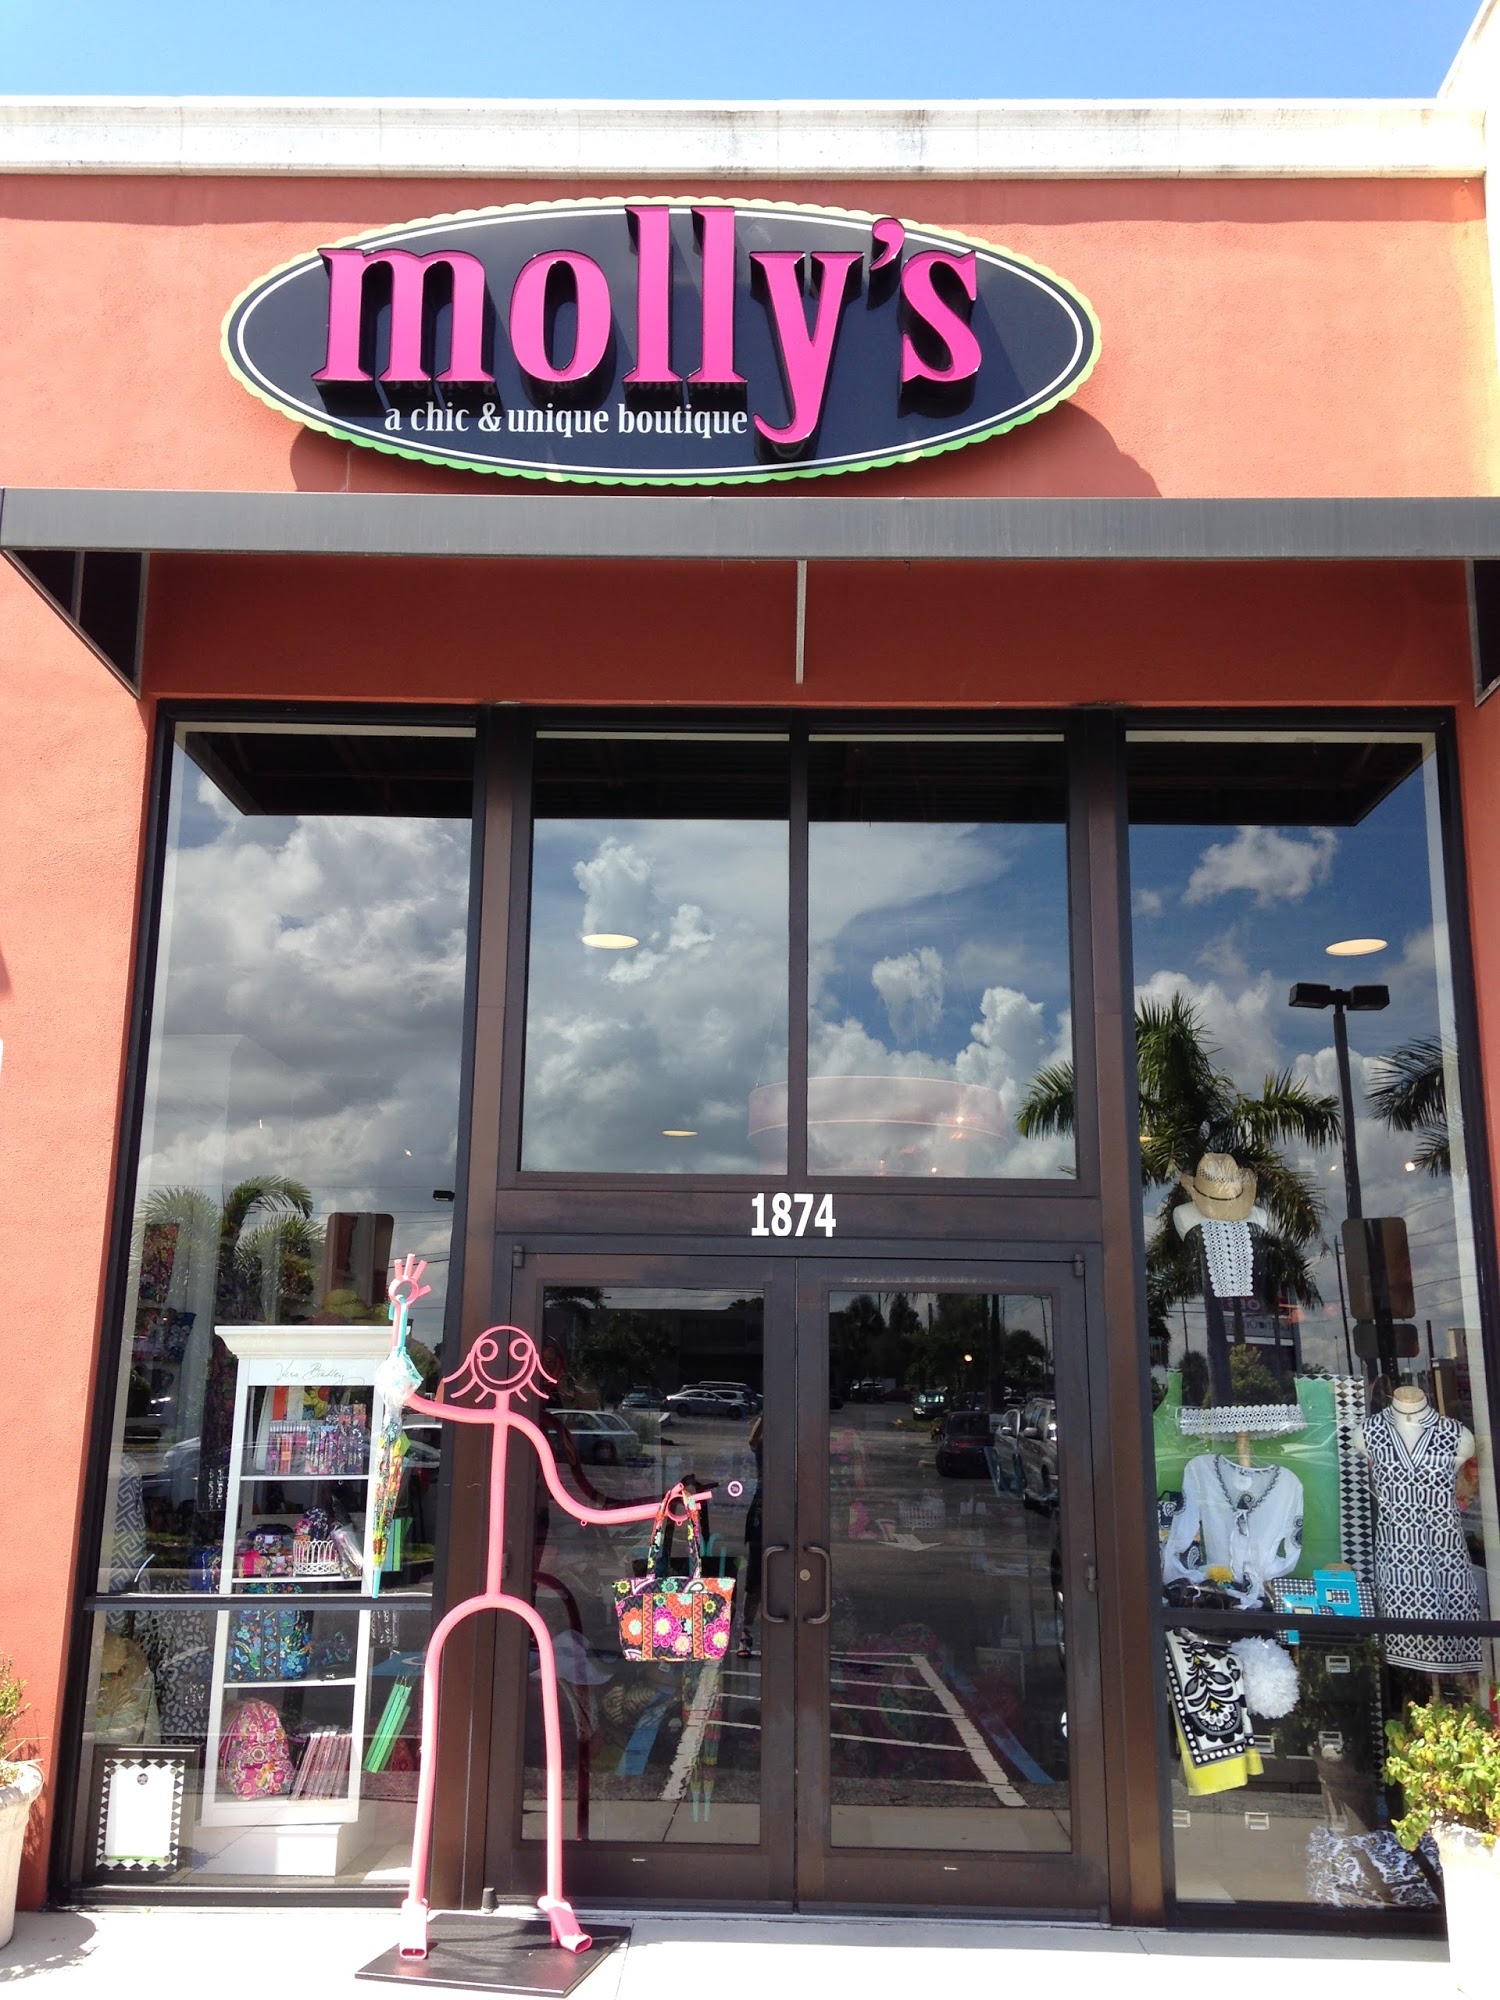 Molly's - A Chic and Unique Boutique